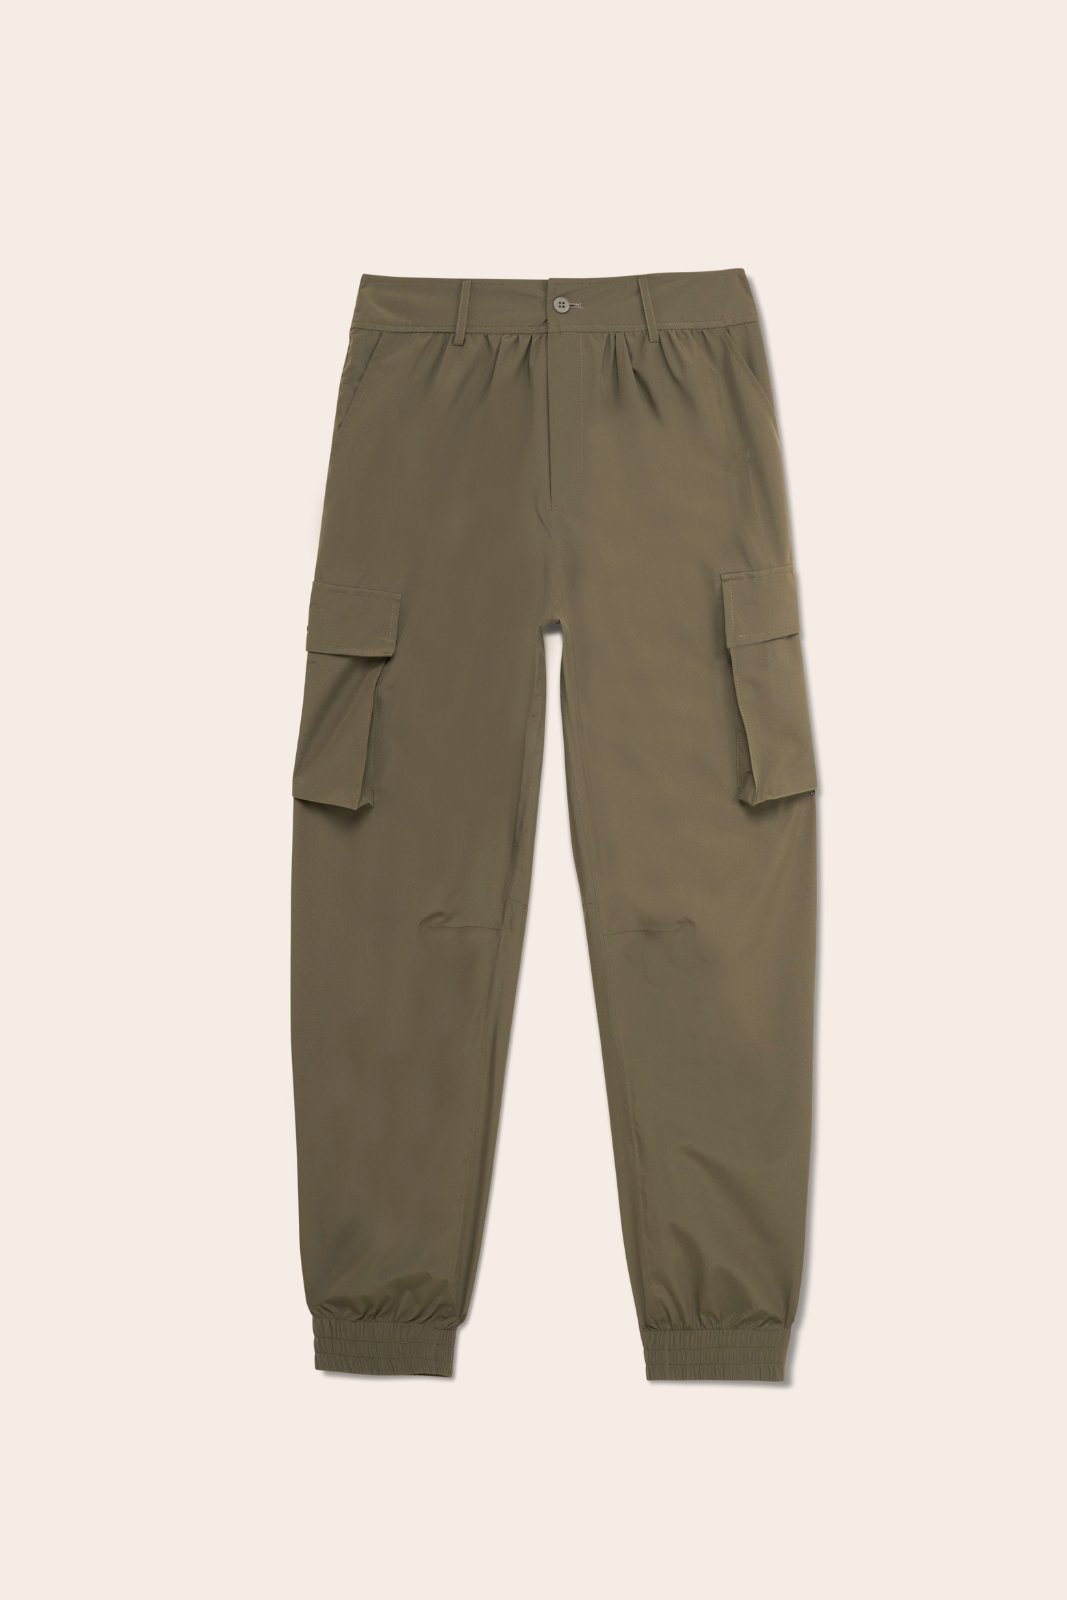 Gambetta waterproof multi-pocket cargo pants #kaki_color